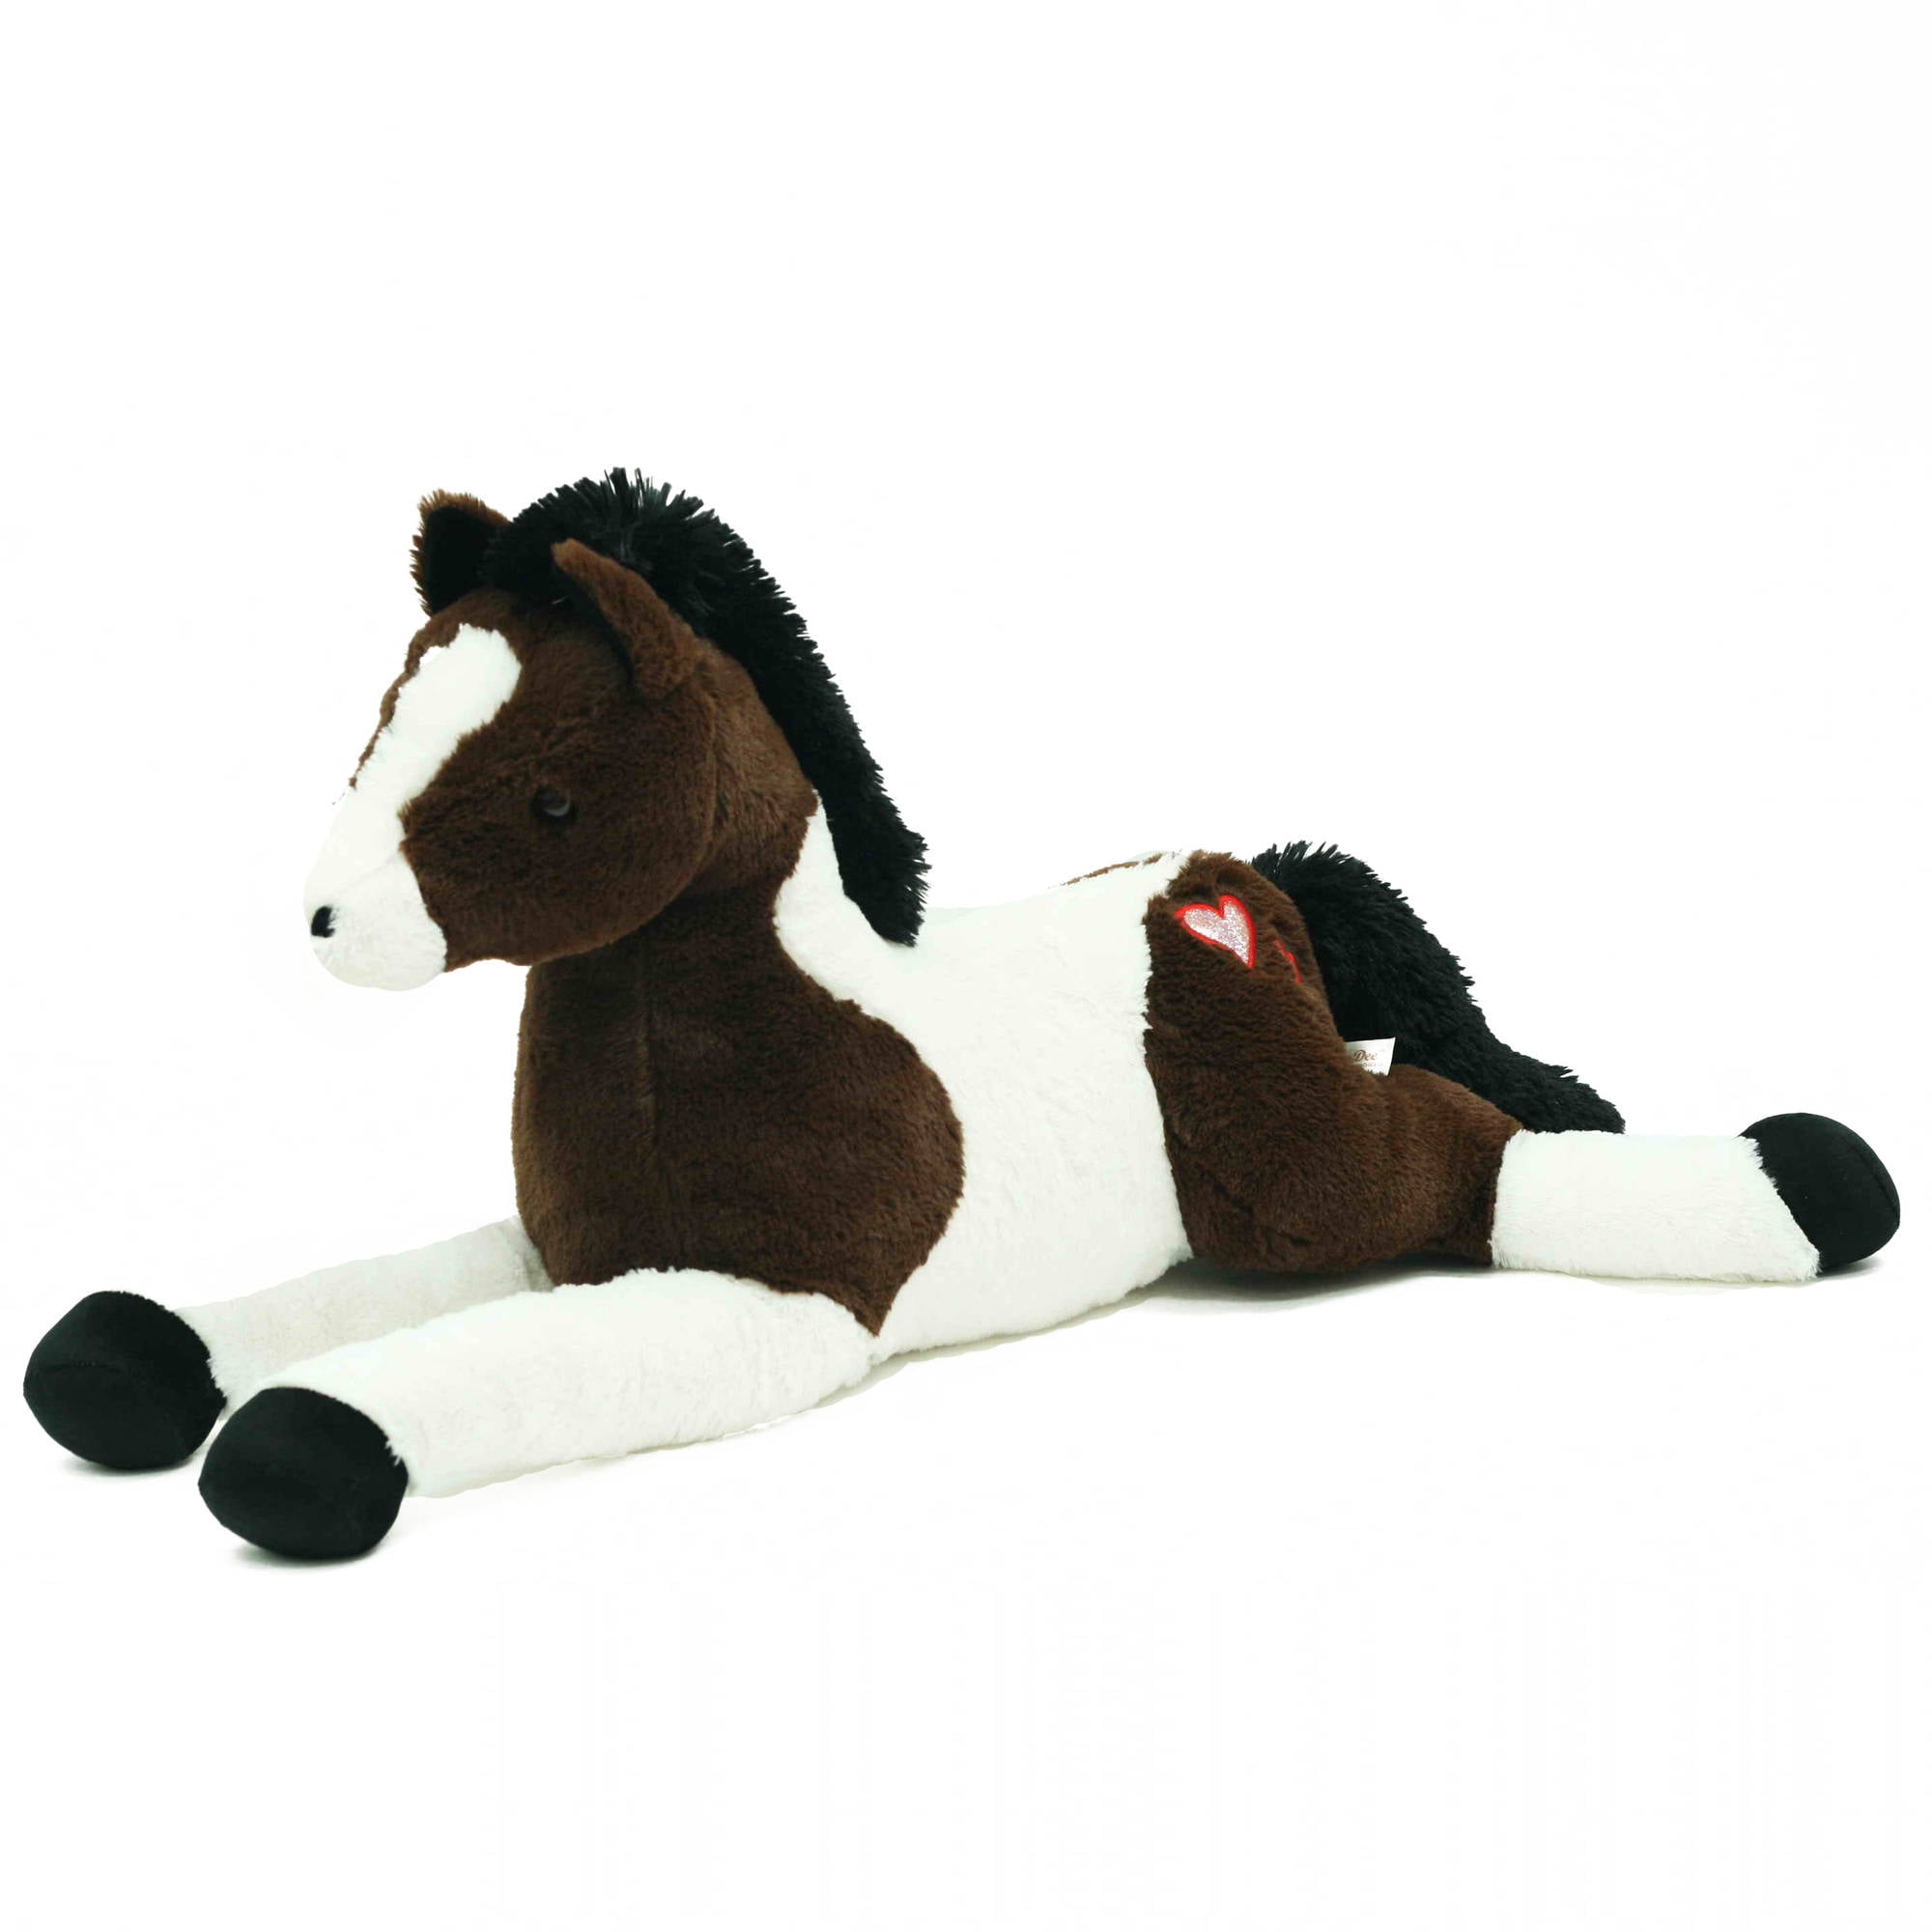 walmart stuffed horse